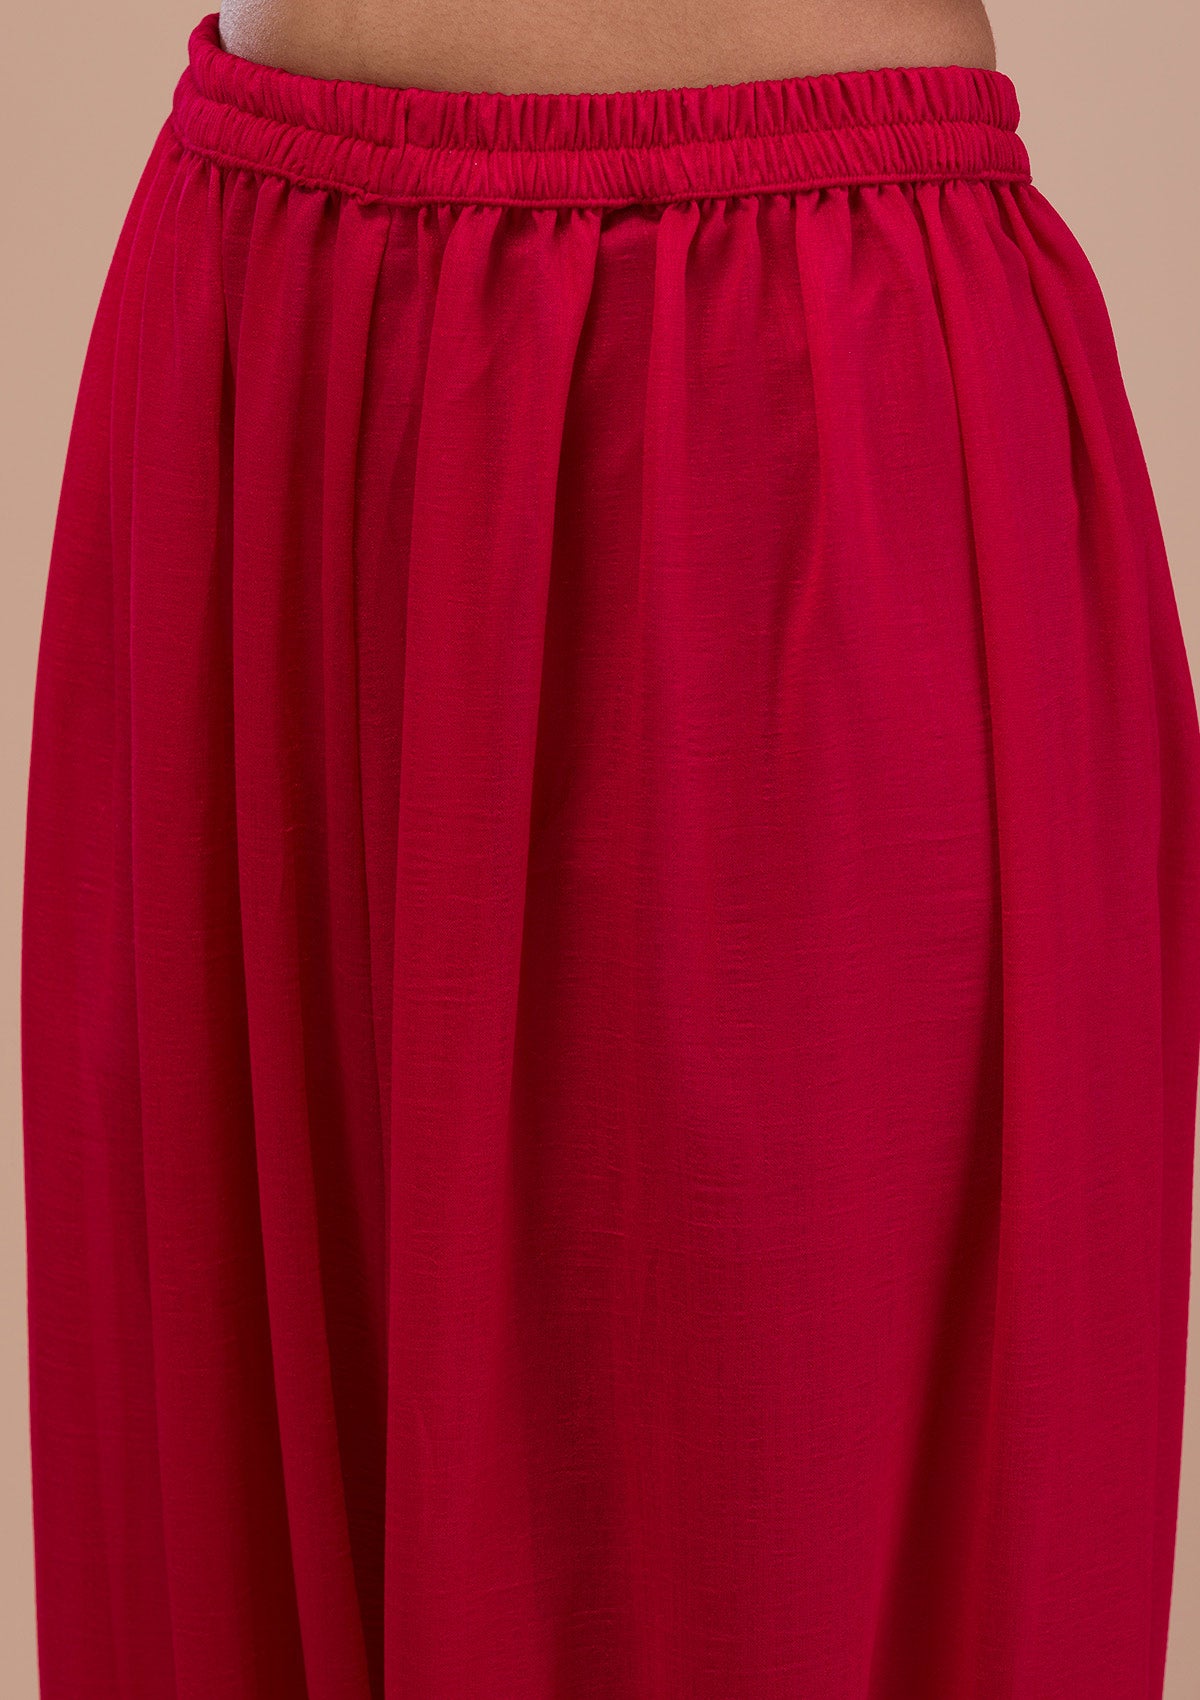 Pink Zariwork Art Silk Readymade Salwar Suit